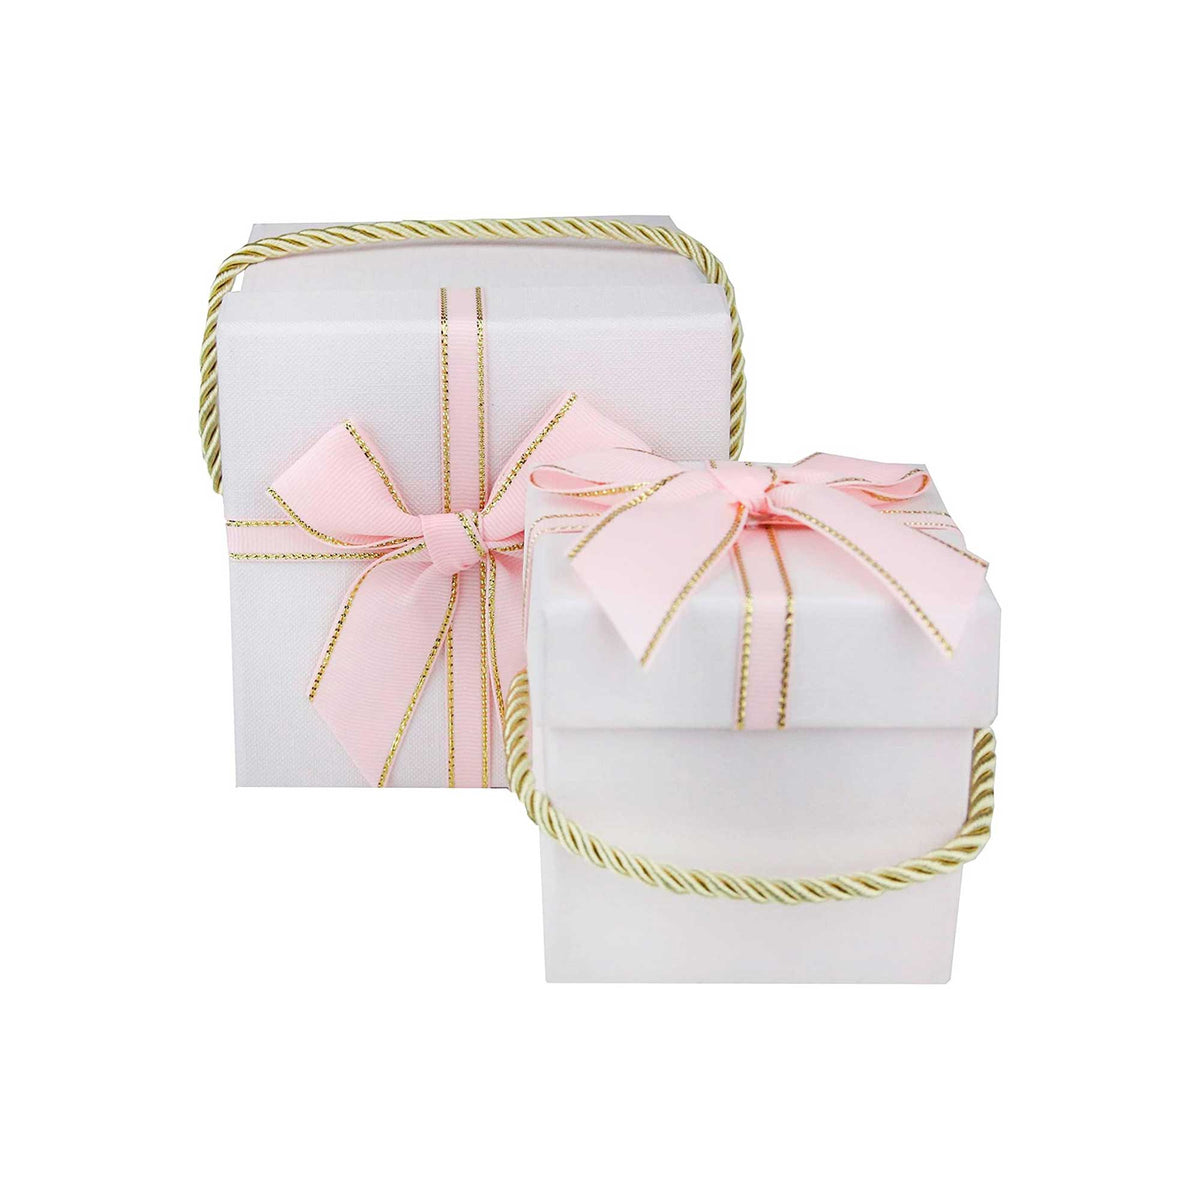 Set of 2 Pink Gift Boxes